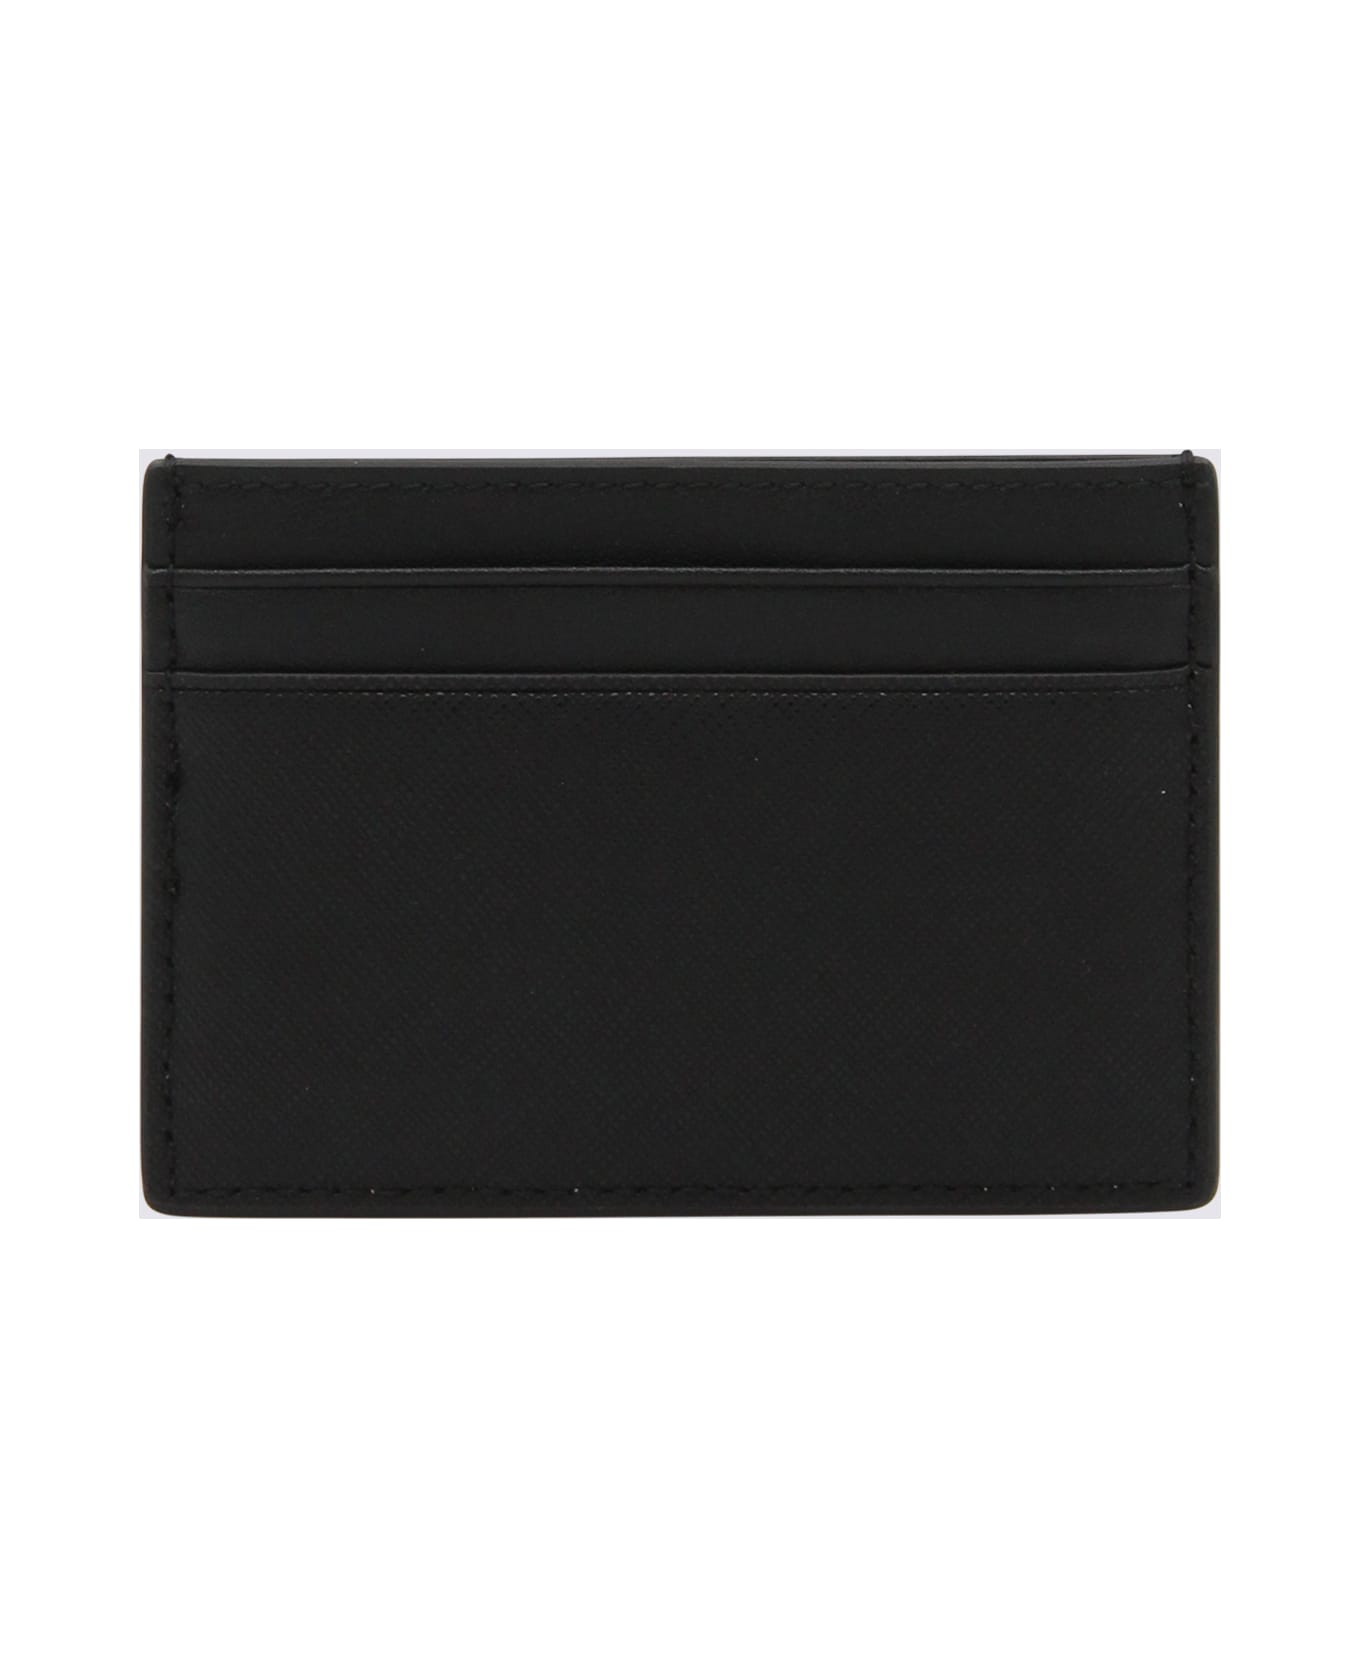 Bally Black Leather Cardholder - Black